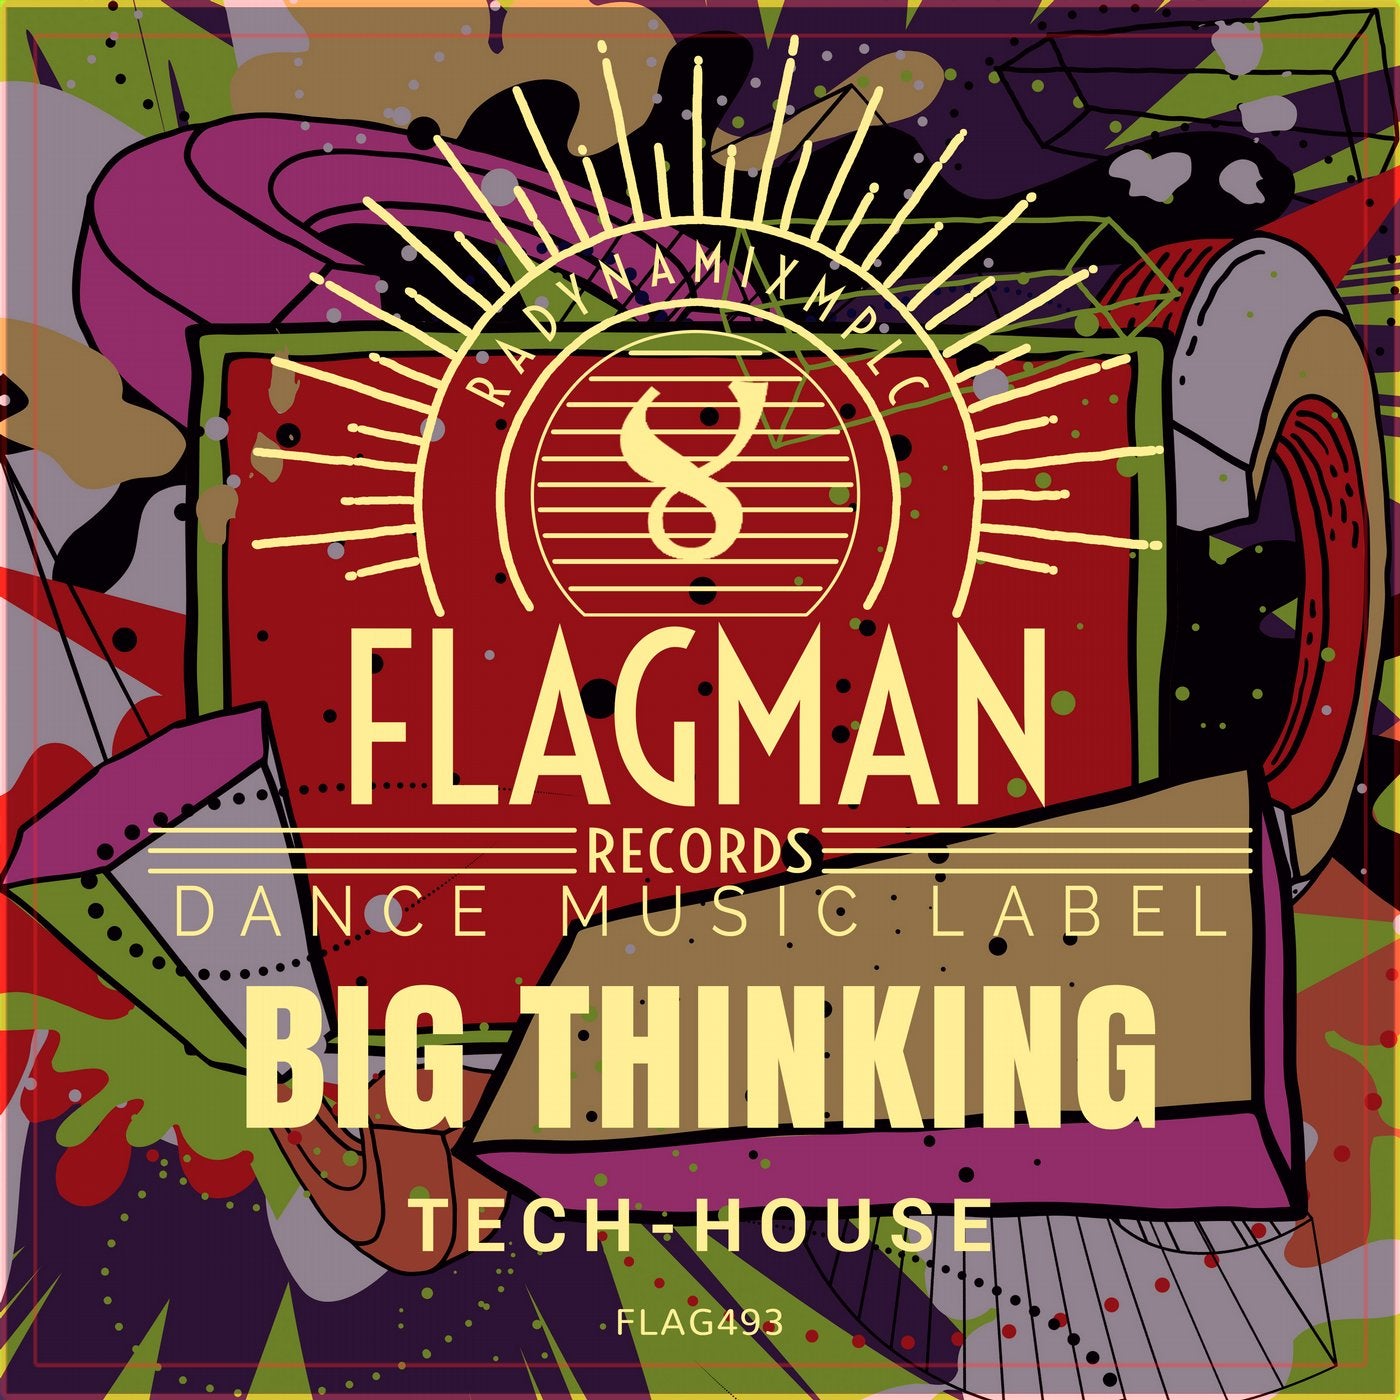 Big Thinking Tech House